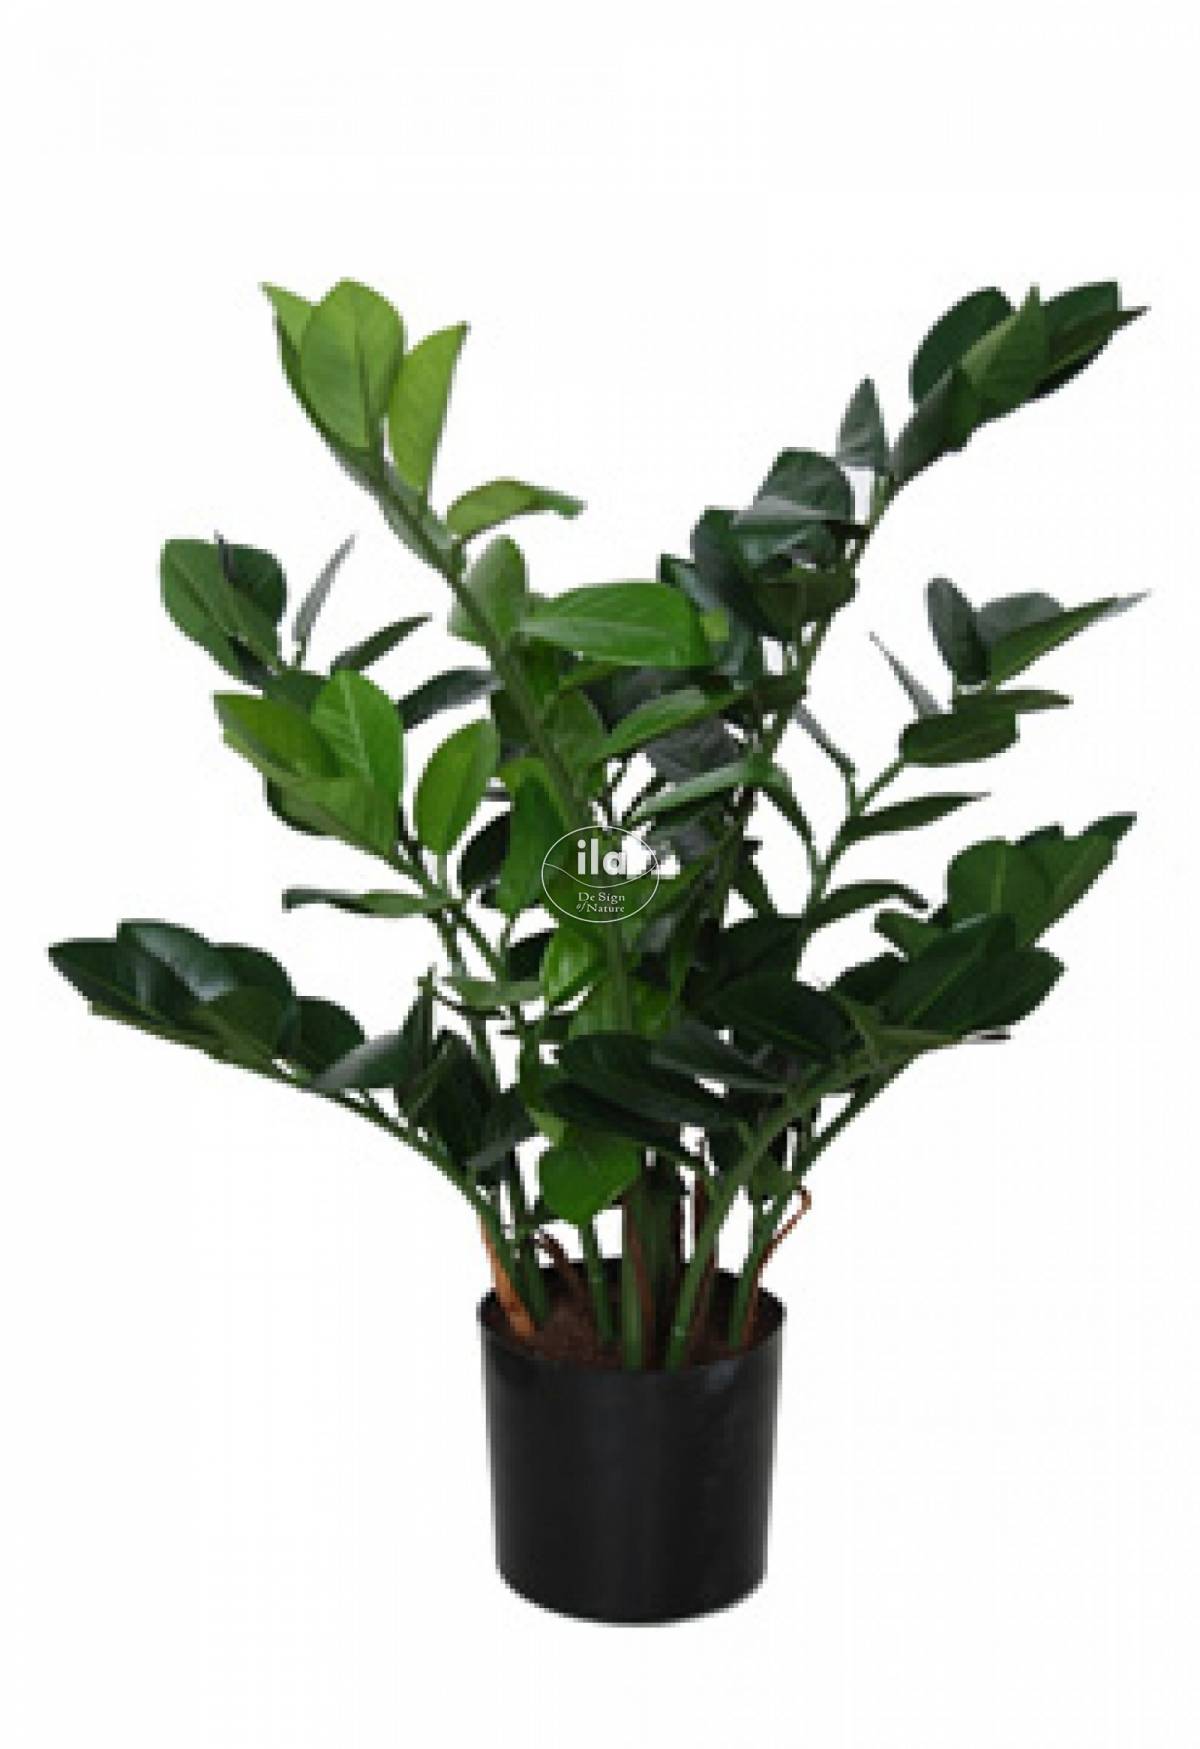 47240-zamiifolia-bush-w-pot-60-cm-green-5435grn-1.jpg